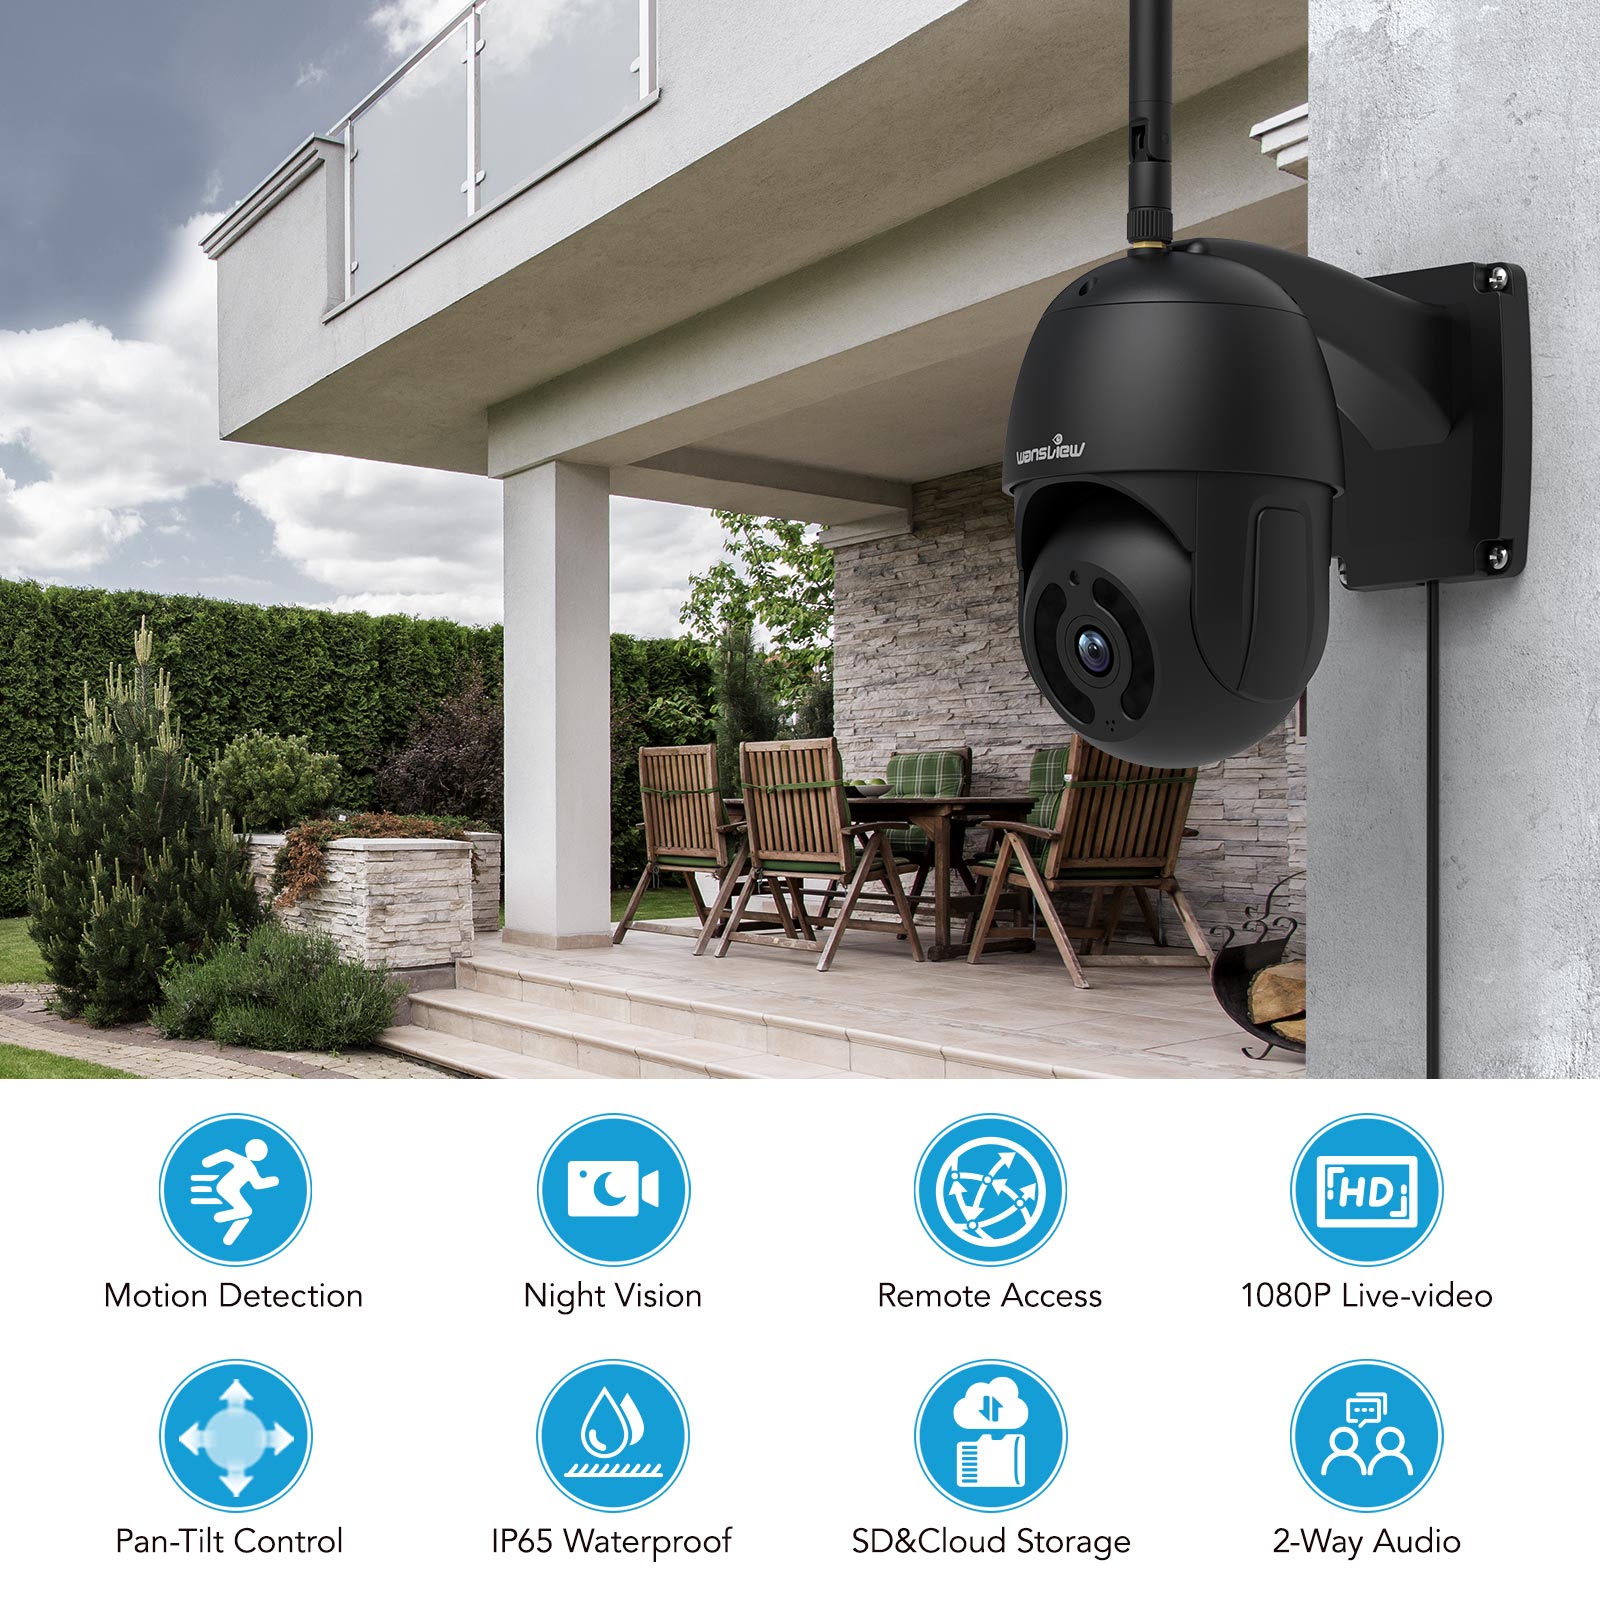 Wansview Wireless 1080P IP Camera, WiFi Home Security Surveillance